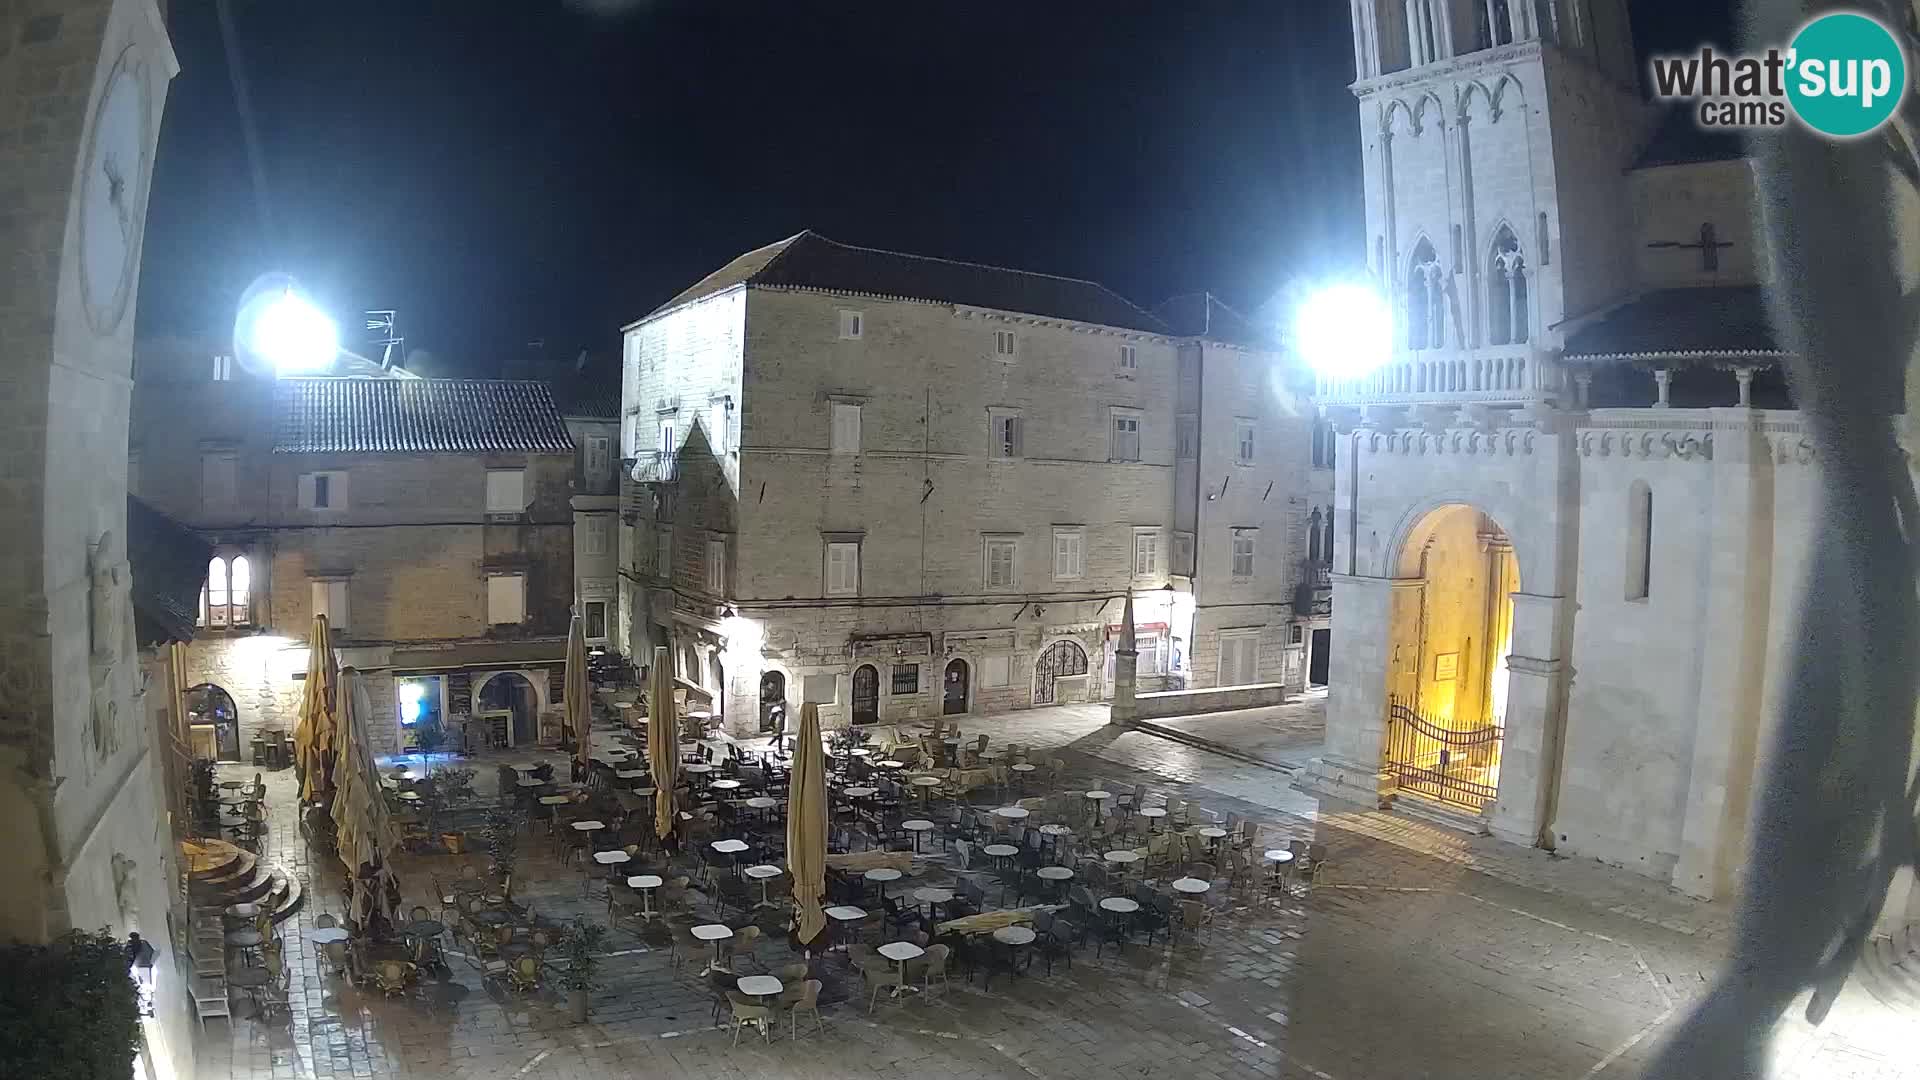 Cámara web en vivo Trogir – Catedral de San Lorenzo – Livecam Croacia